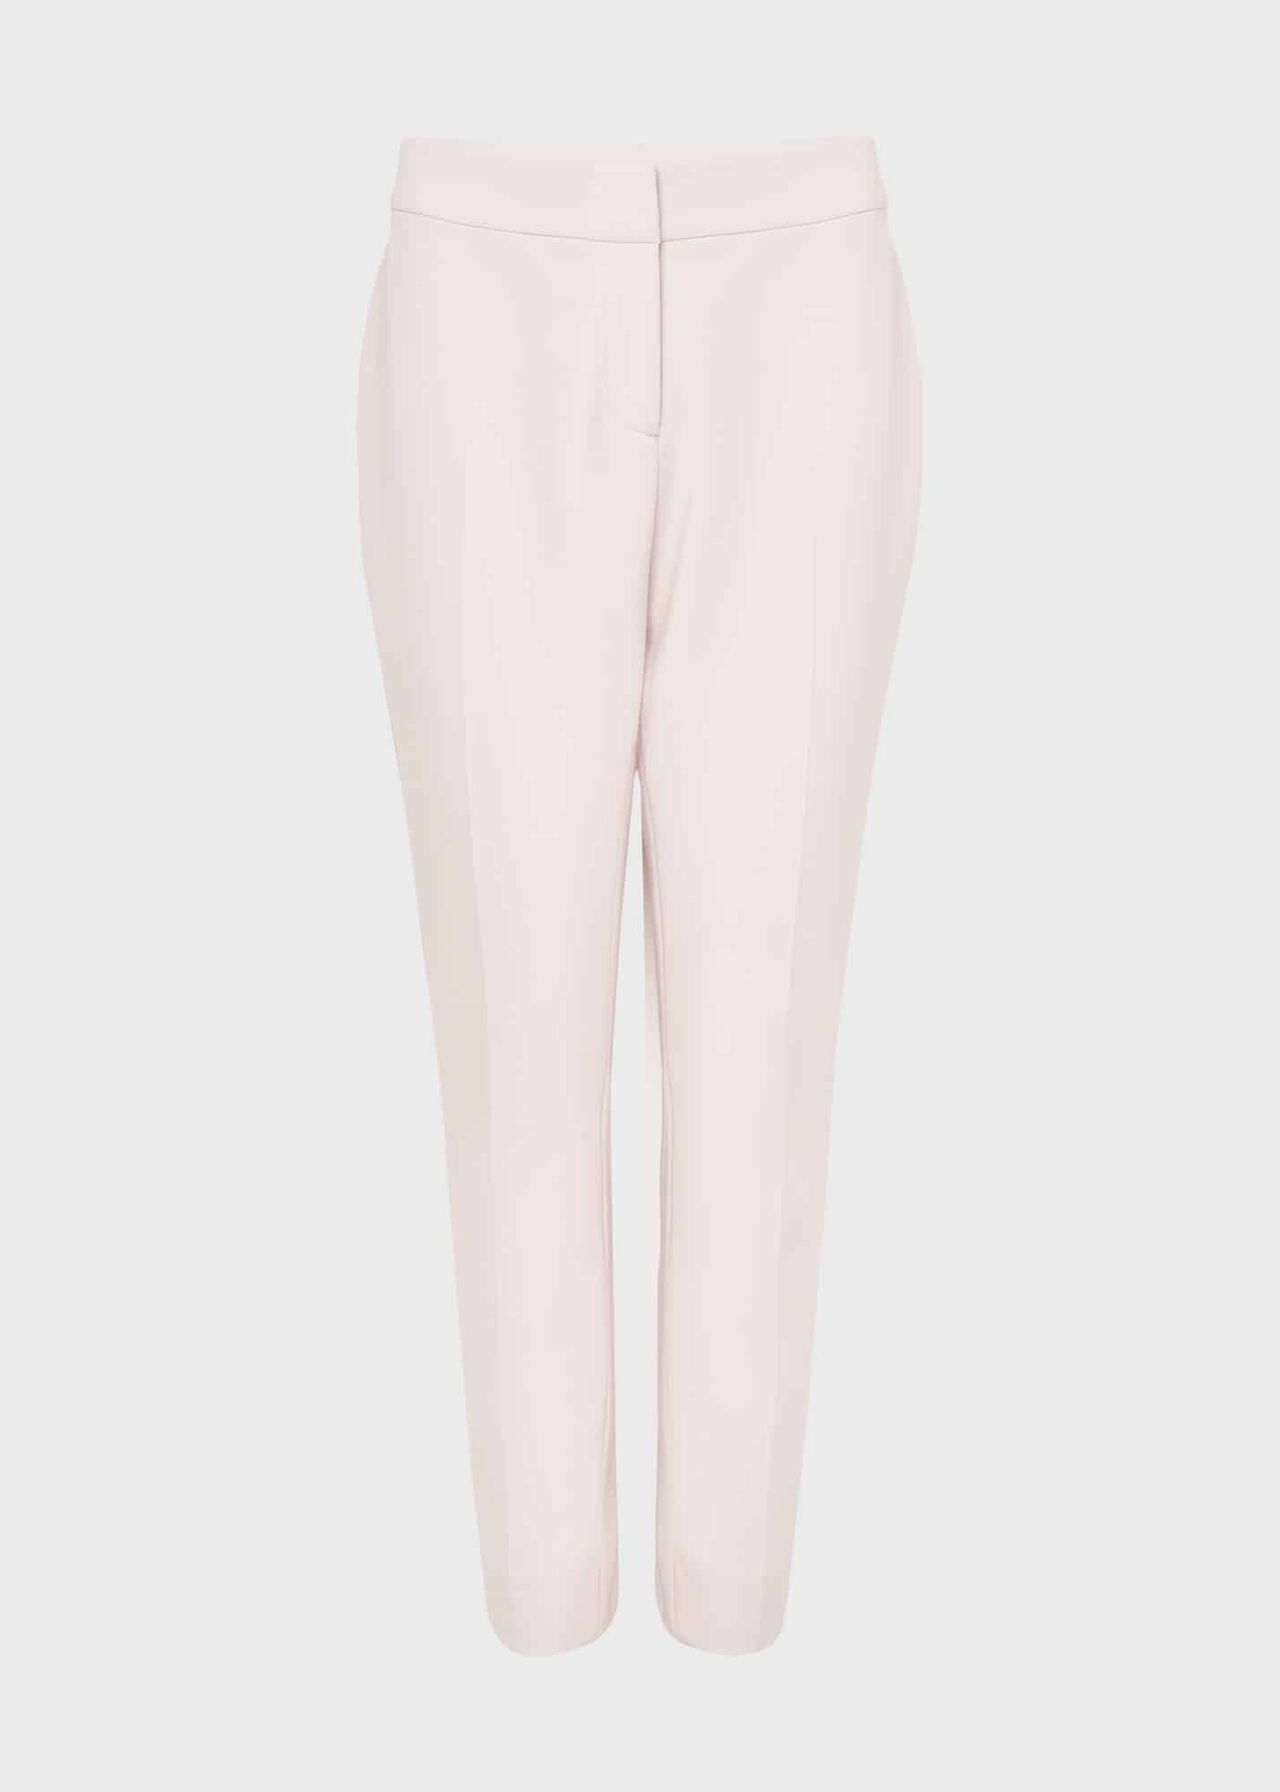 Kaia Slim Pants, Pale Pink, hi-res